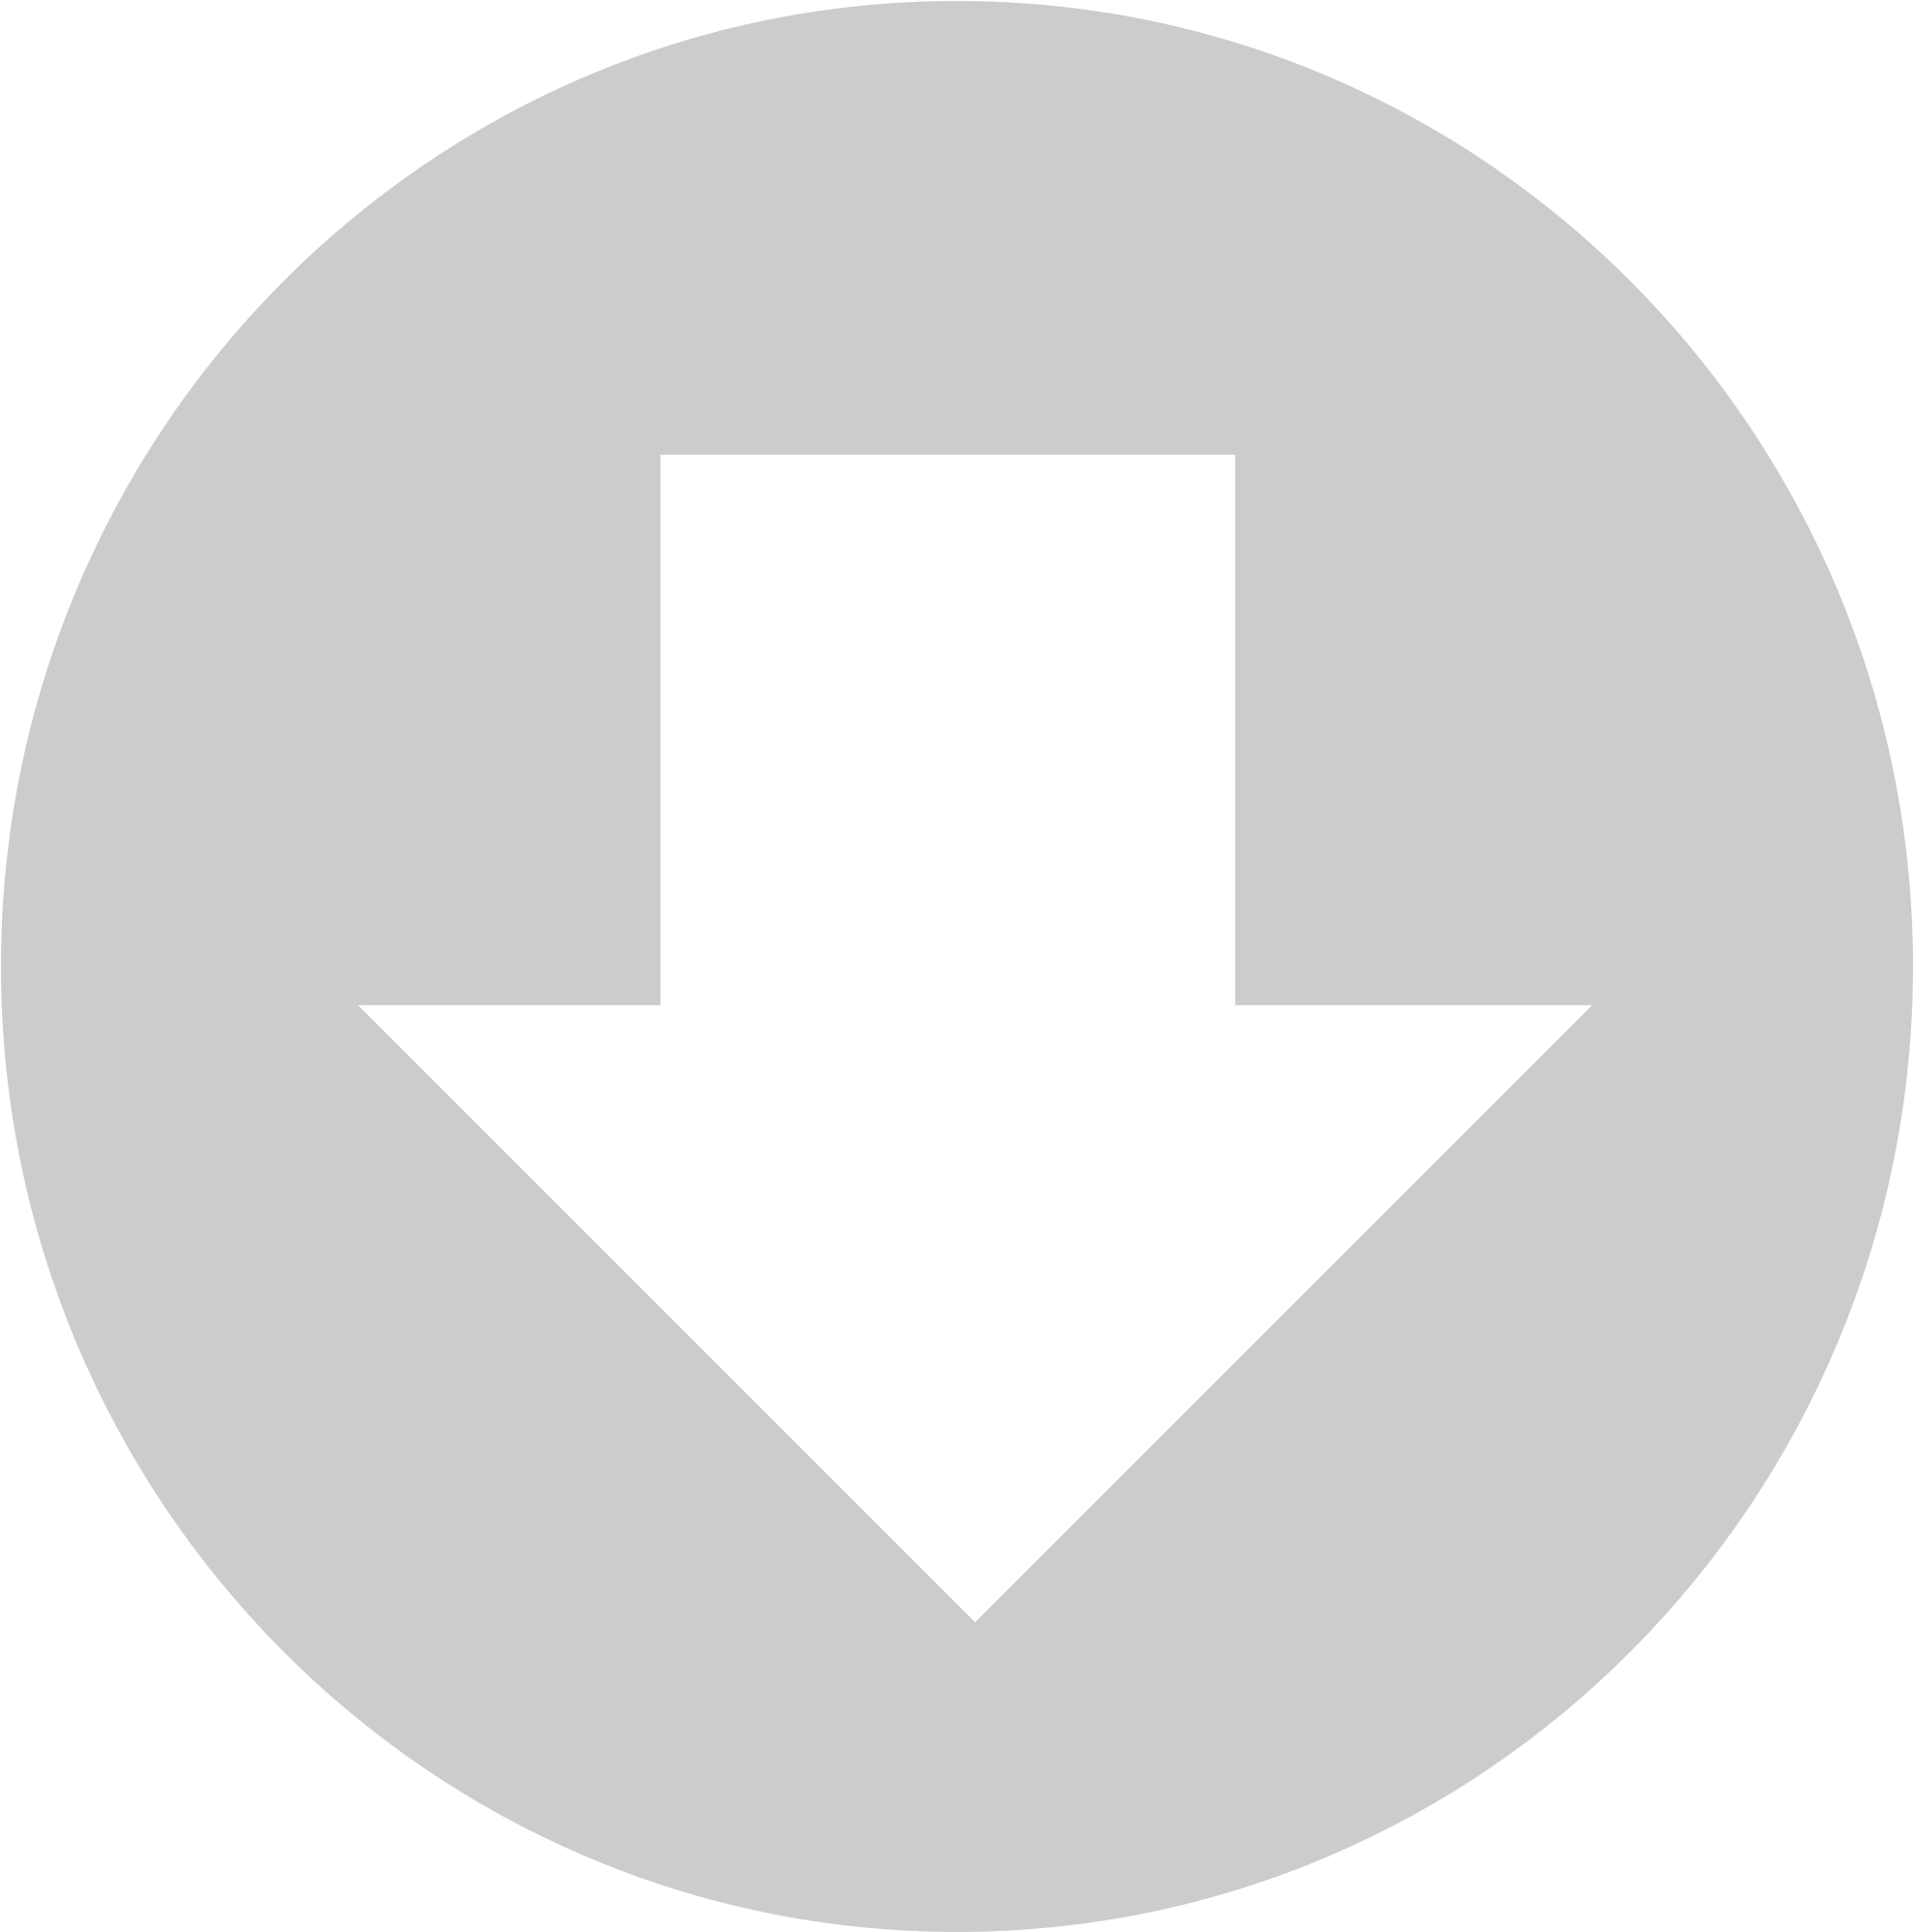 Circled Gray Arrow Pointing Down Down Arrow Icon